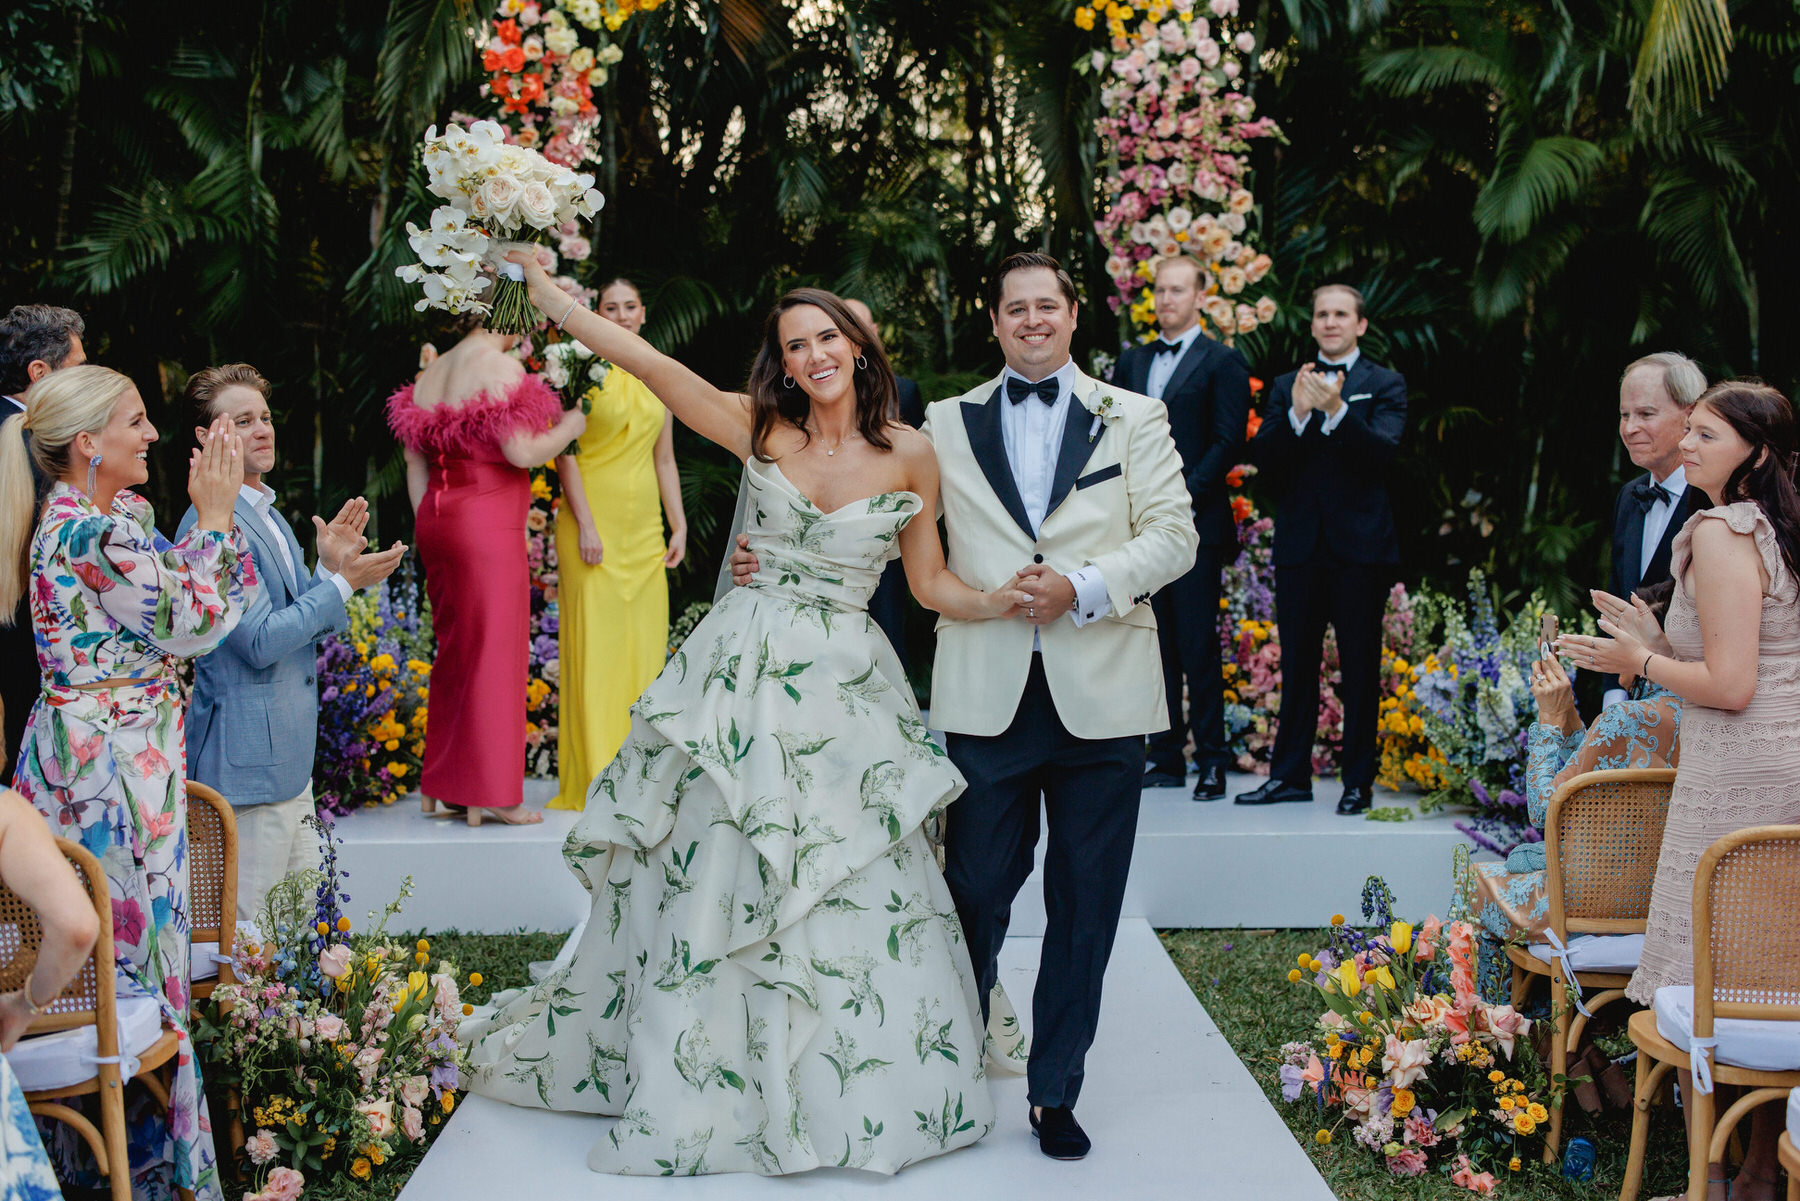 Take it Photo - Mexico wedding photographers